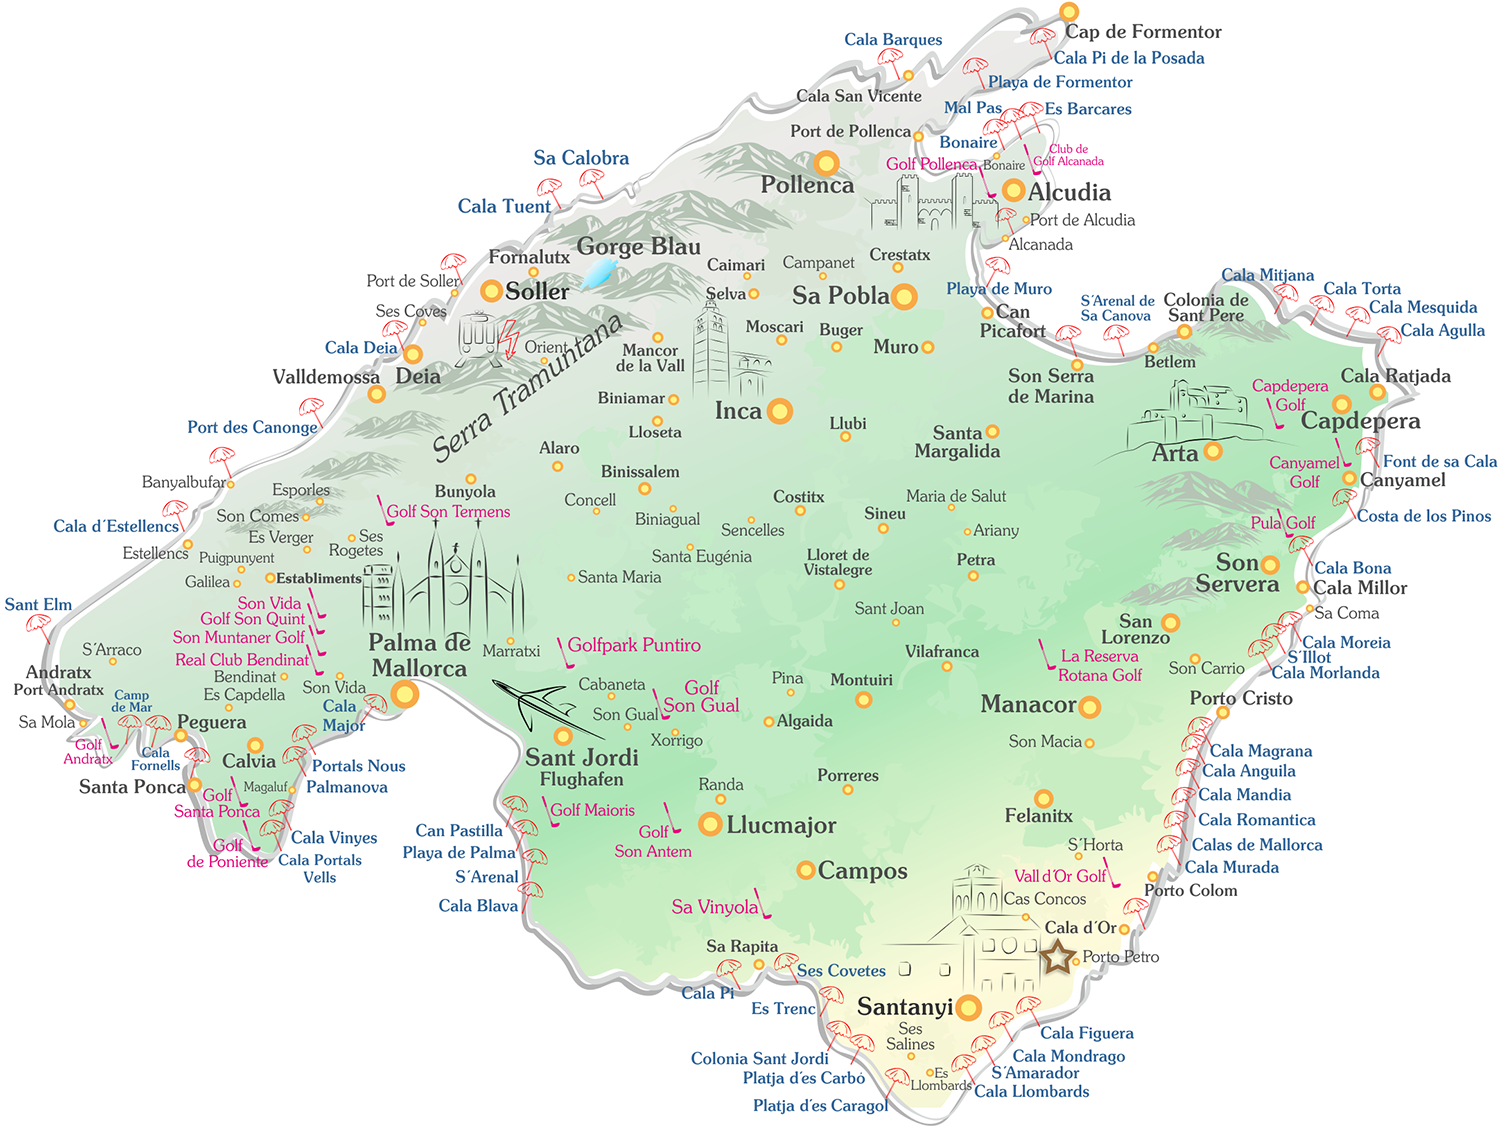 Portopetro auf der Mallorca Karte